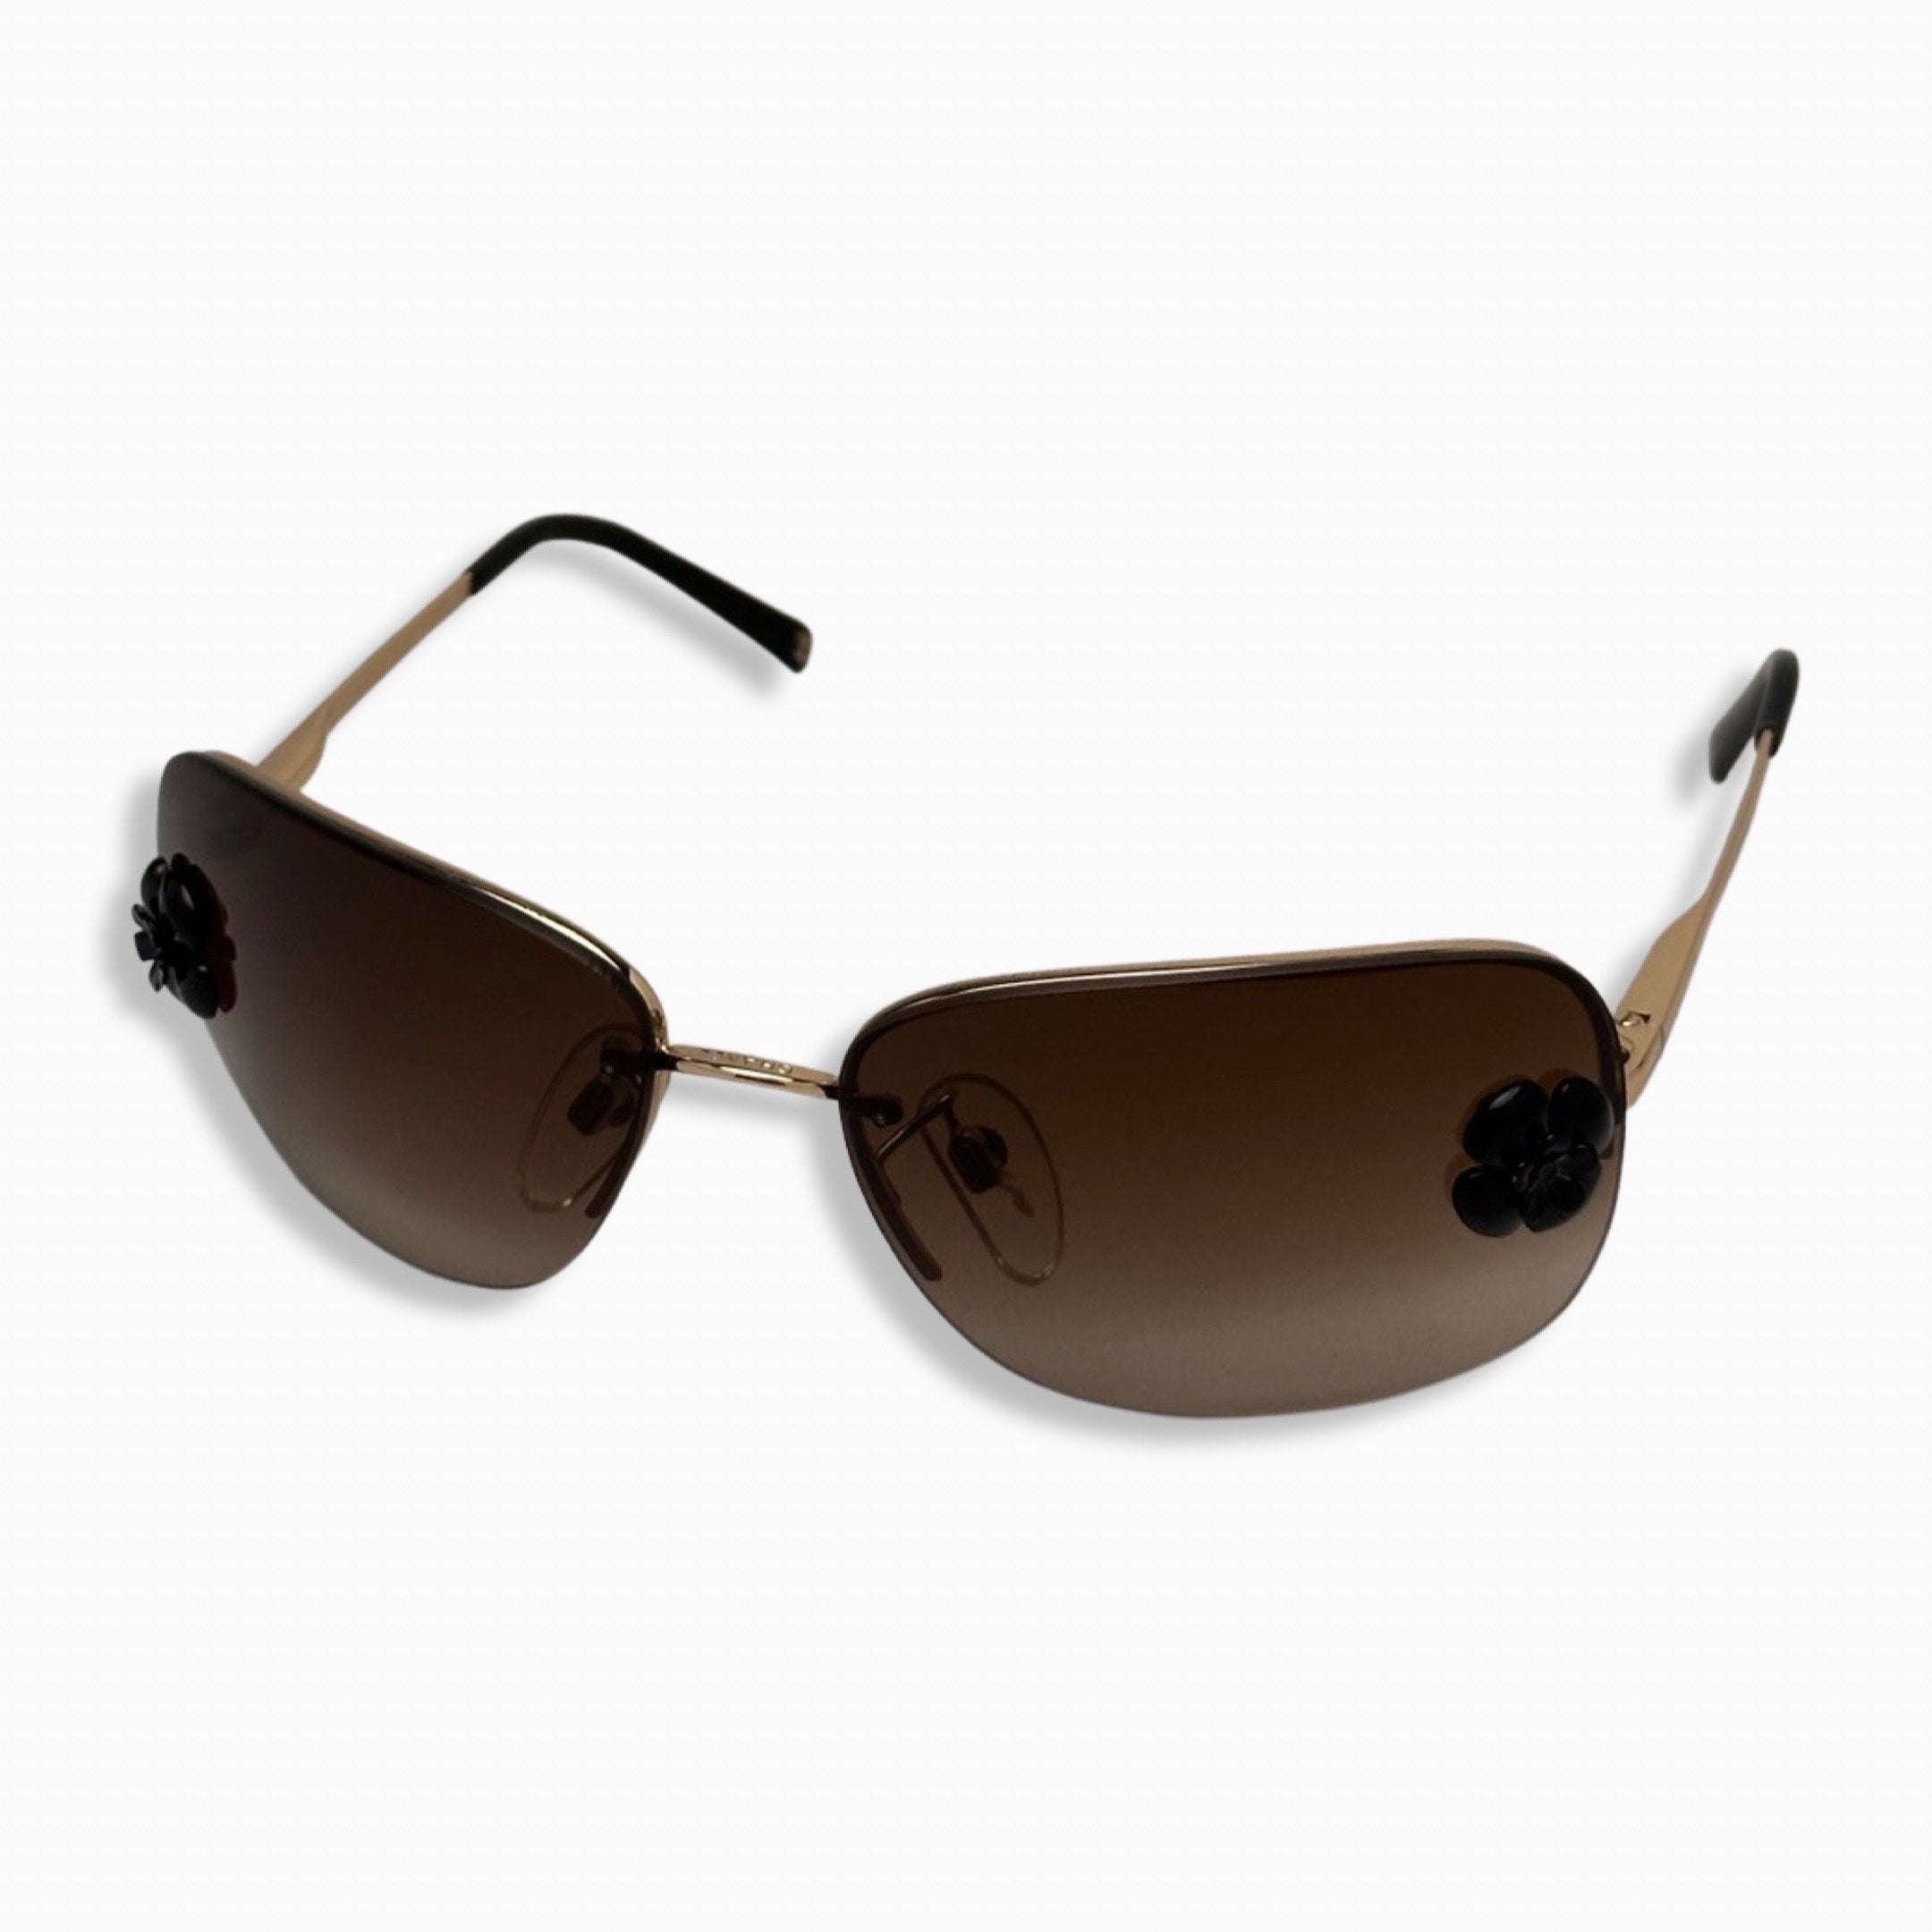 Chanel Camilia Sunglasses – Timeless Vintage Company